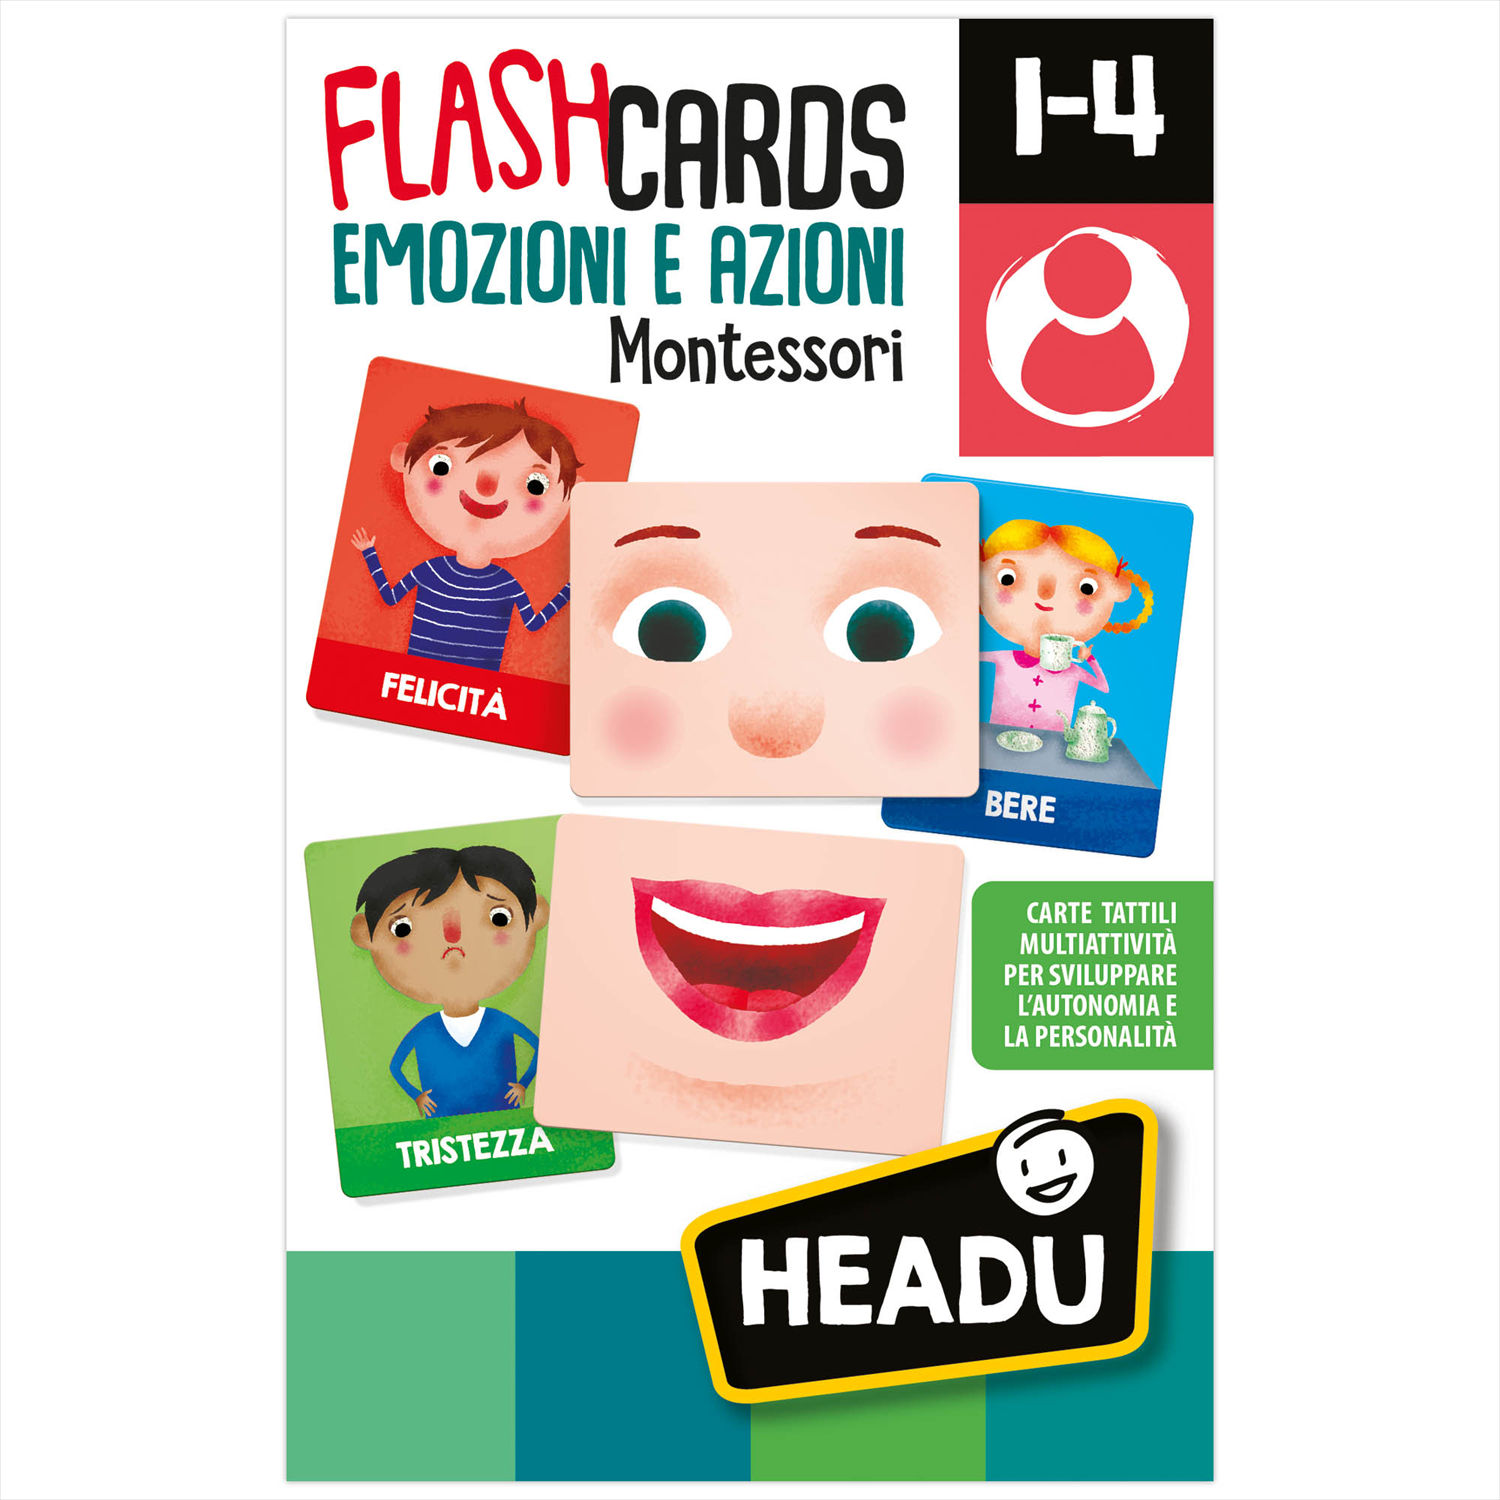 Headu Flashcards Montessori, Confronta prezzi